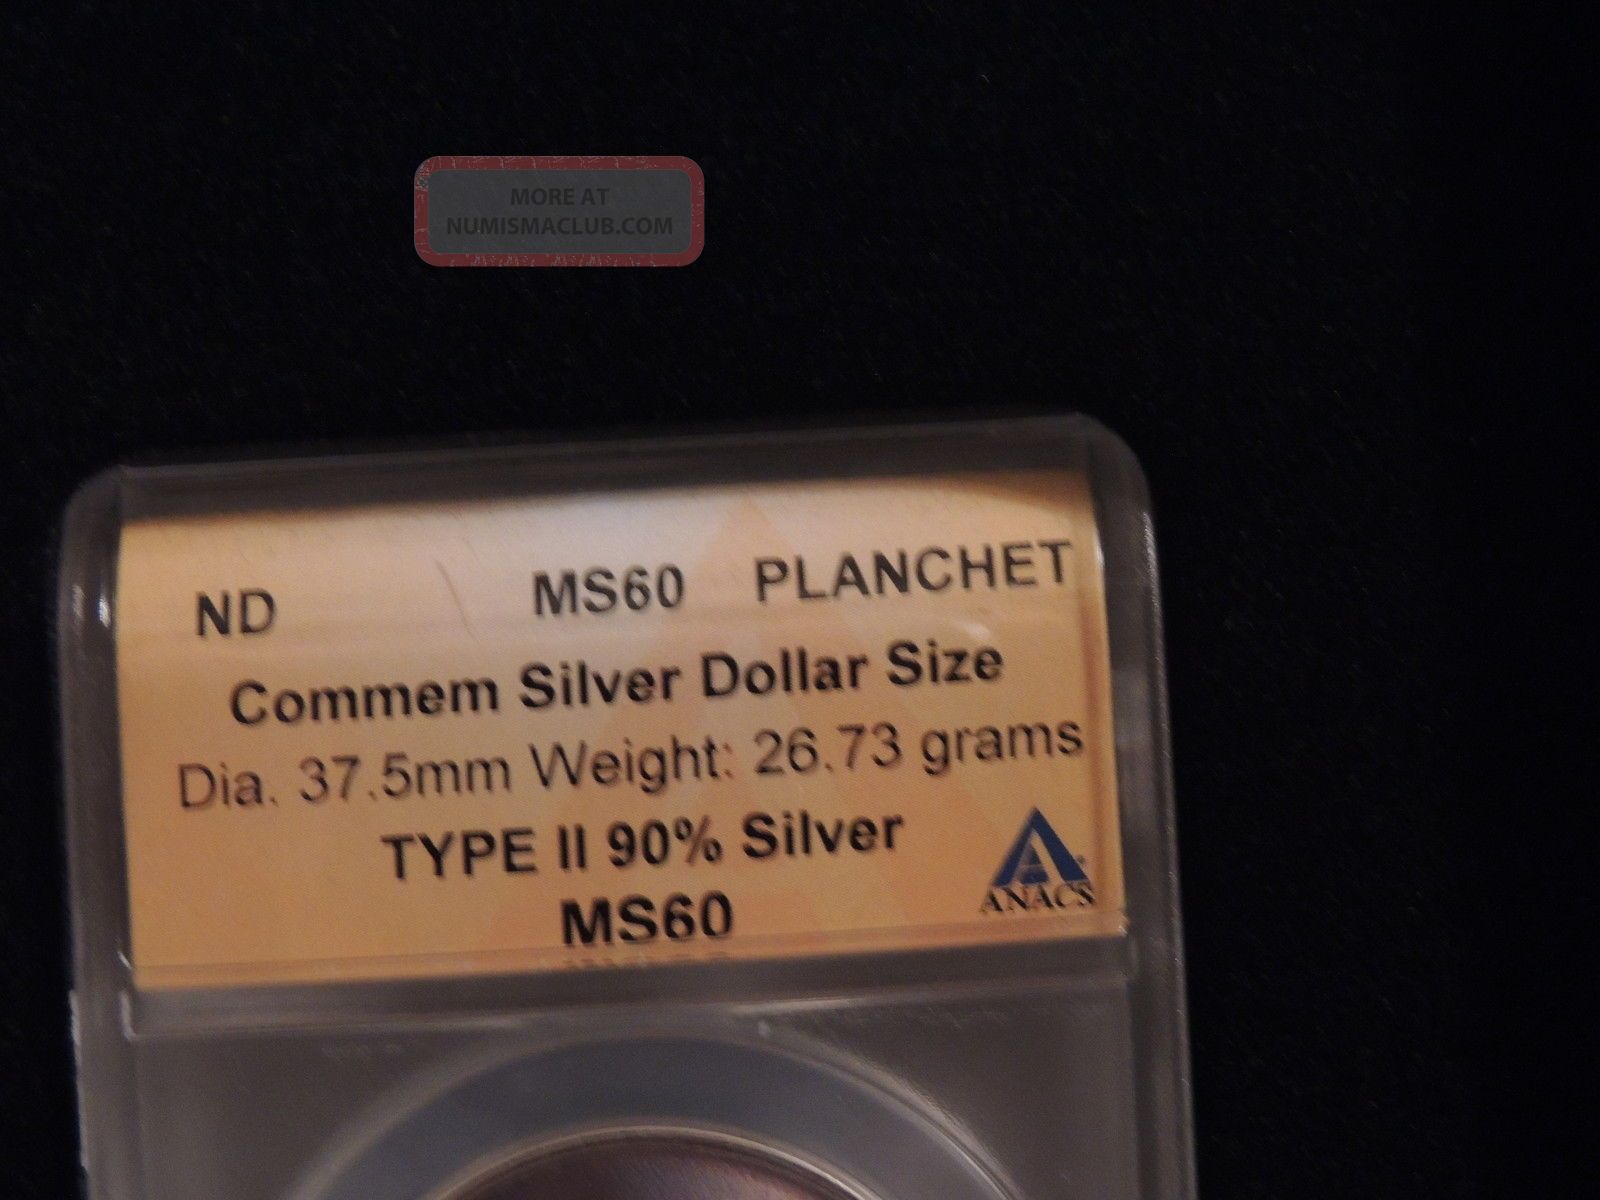 Silver Dollar Error Blank Planchet Anacs Ms60 90% Type 2